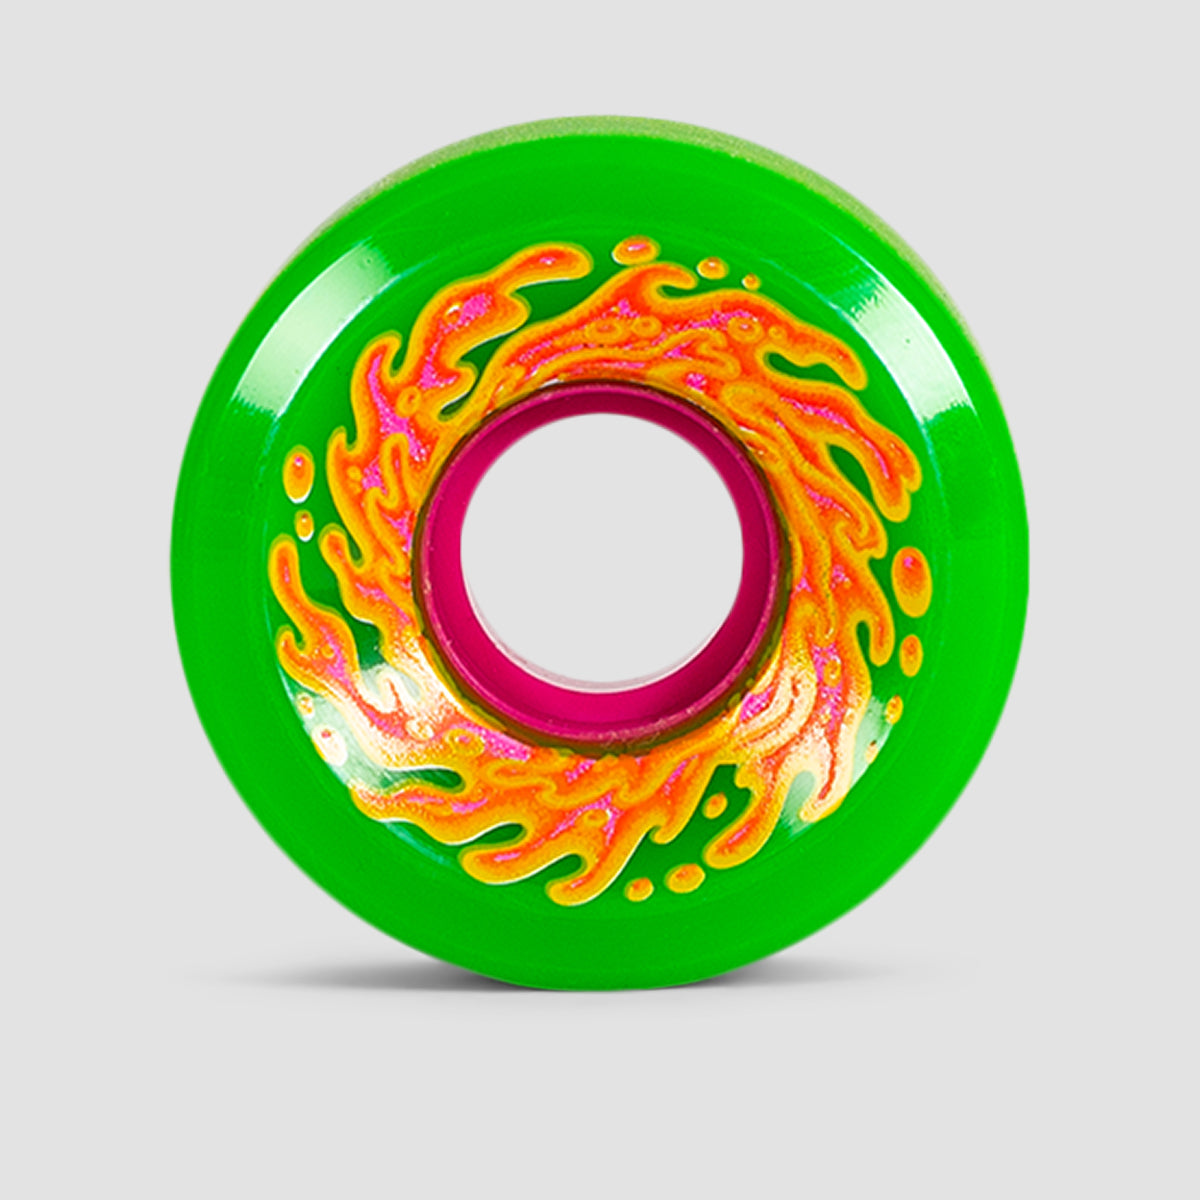 Slime Balls OG Slime 78a Skateboard Wheels Green/Pink 54.5mm